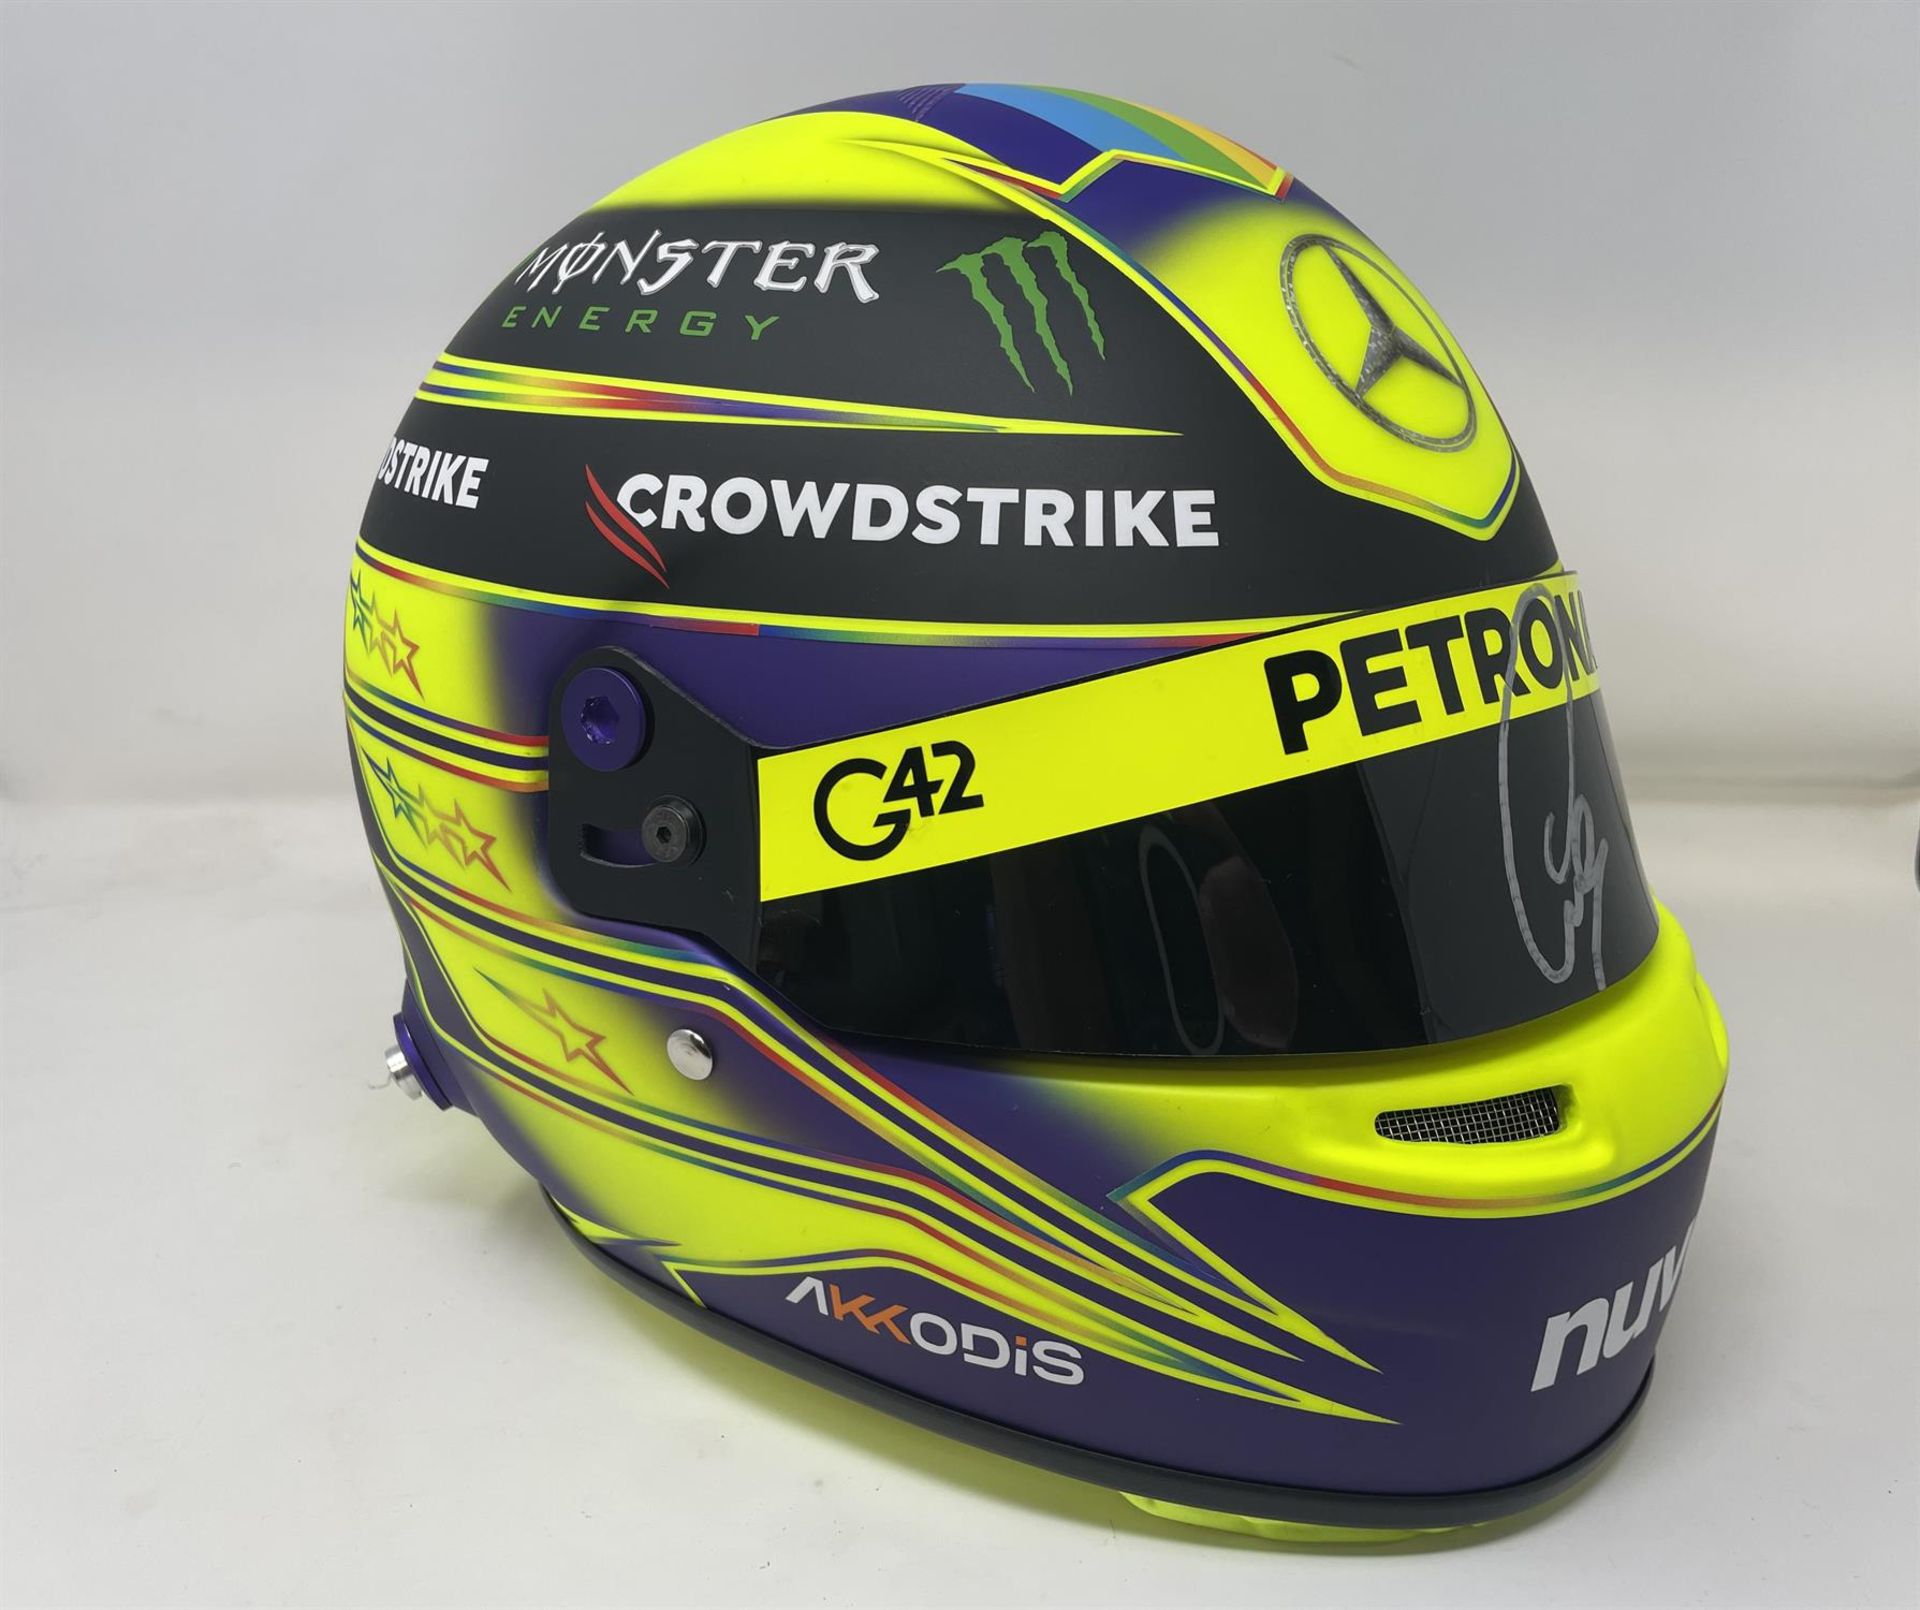 Replica Lewis Hamilton 2023 Helmet with Signature to the Visor - Image 9 of 10